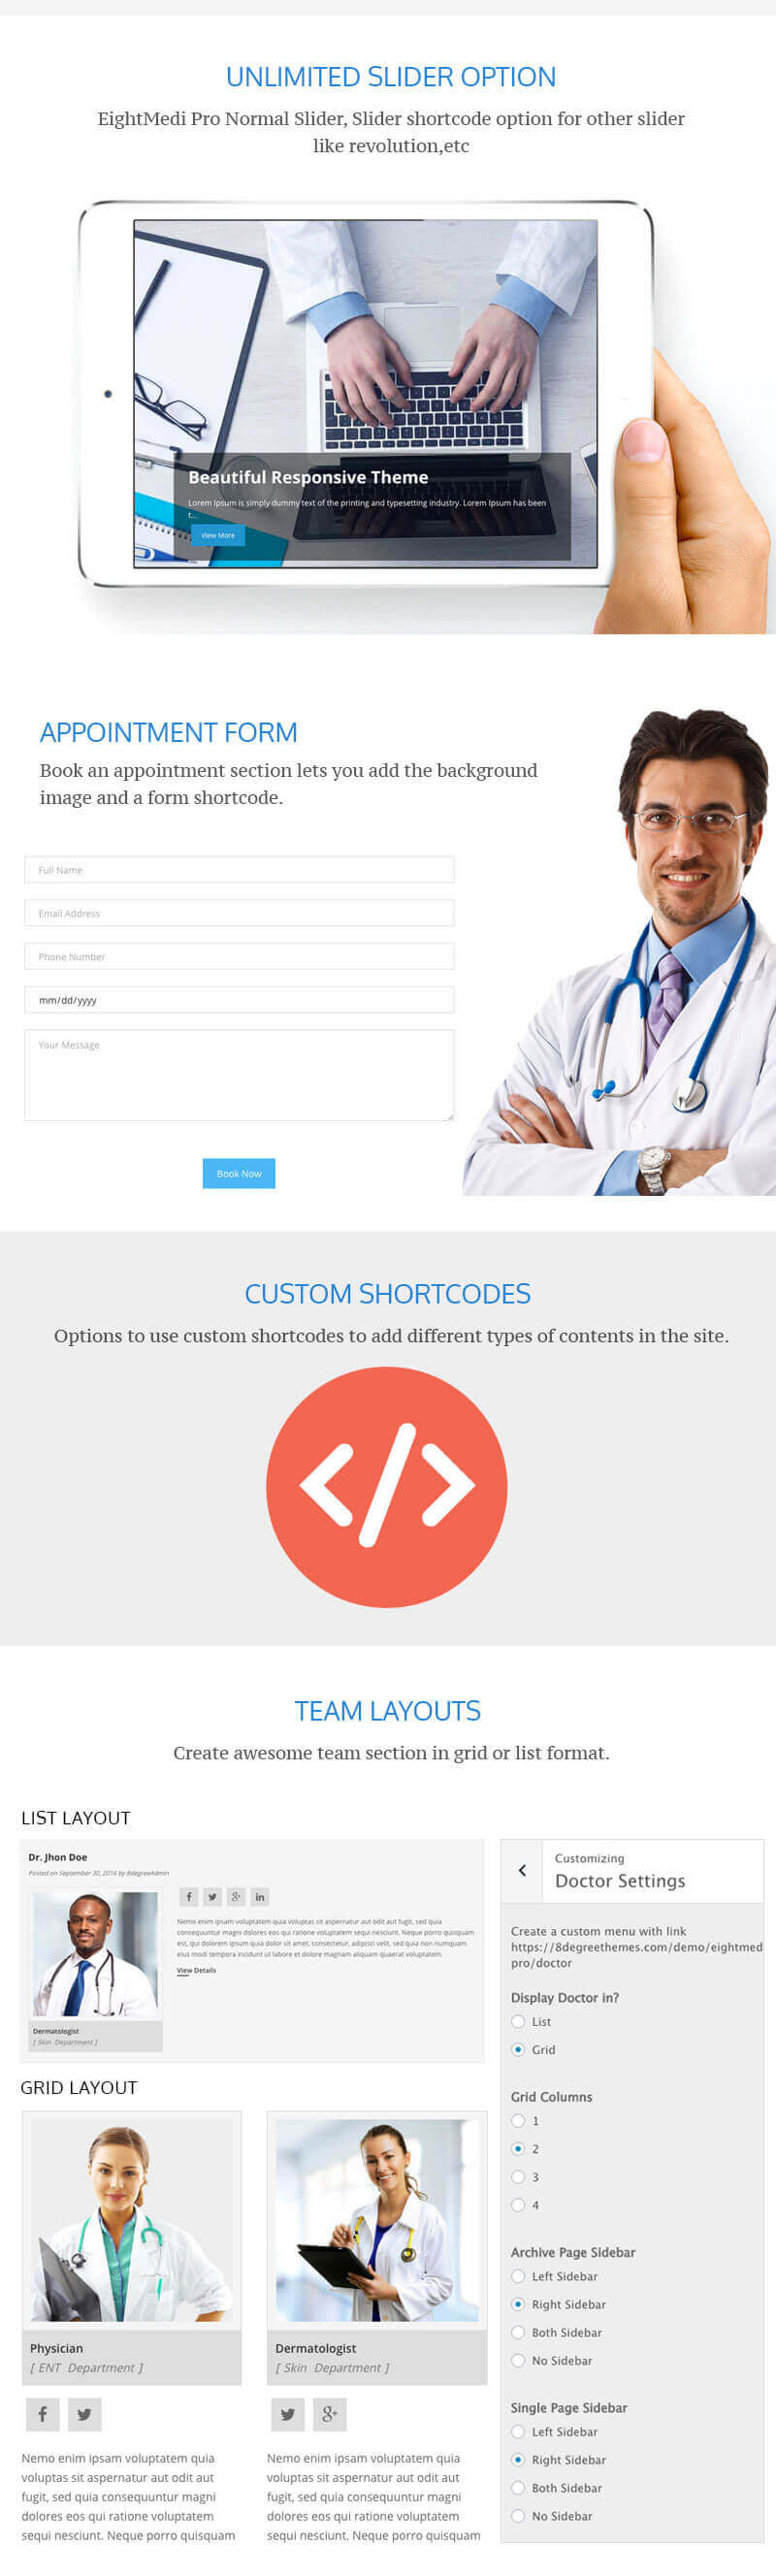 EightMedi Pro – Best Premium Medical & Healthcare WordPress Theme